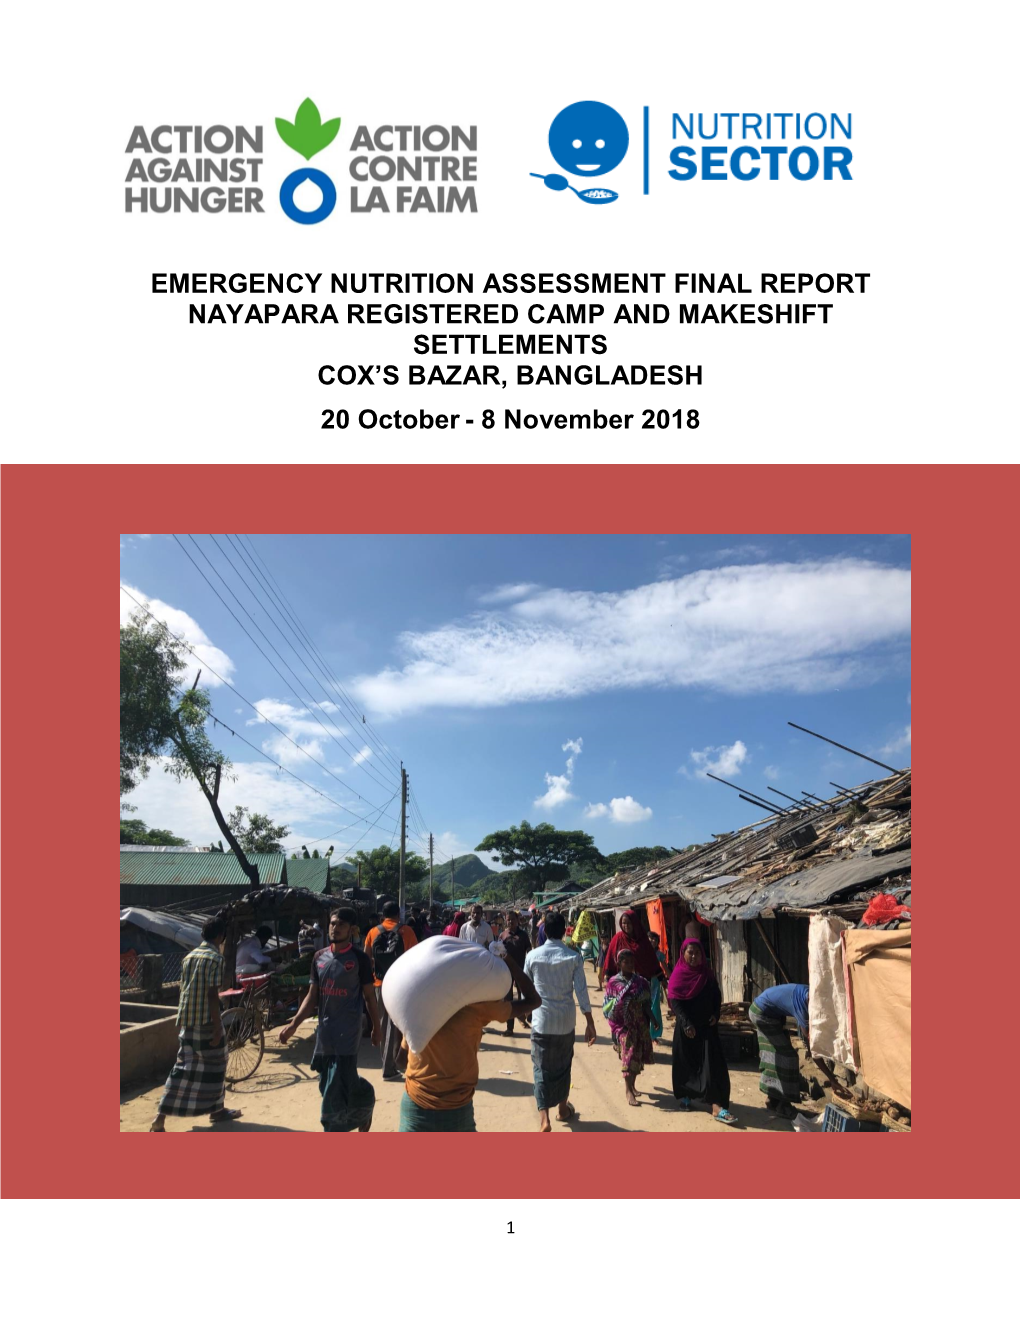 EMERGENCY NUTRITION ASSESSMENT FINAL REPORT NAYAPARA REGISTERED CAMP and MAKESHIFT SETTLEMENTS COX’S BAZAR, BANGLADESH 20 October - 8 November 2018